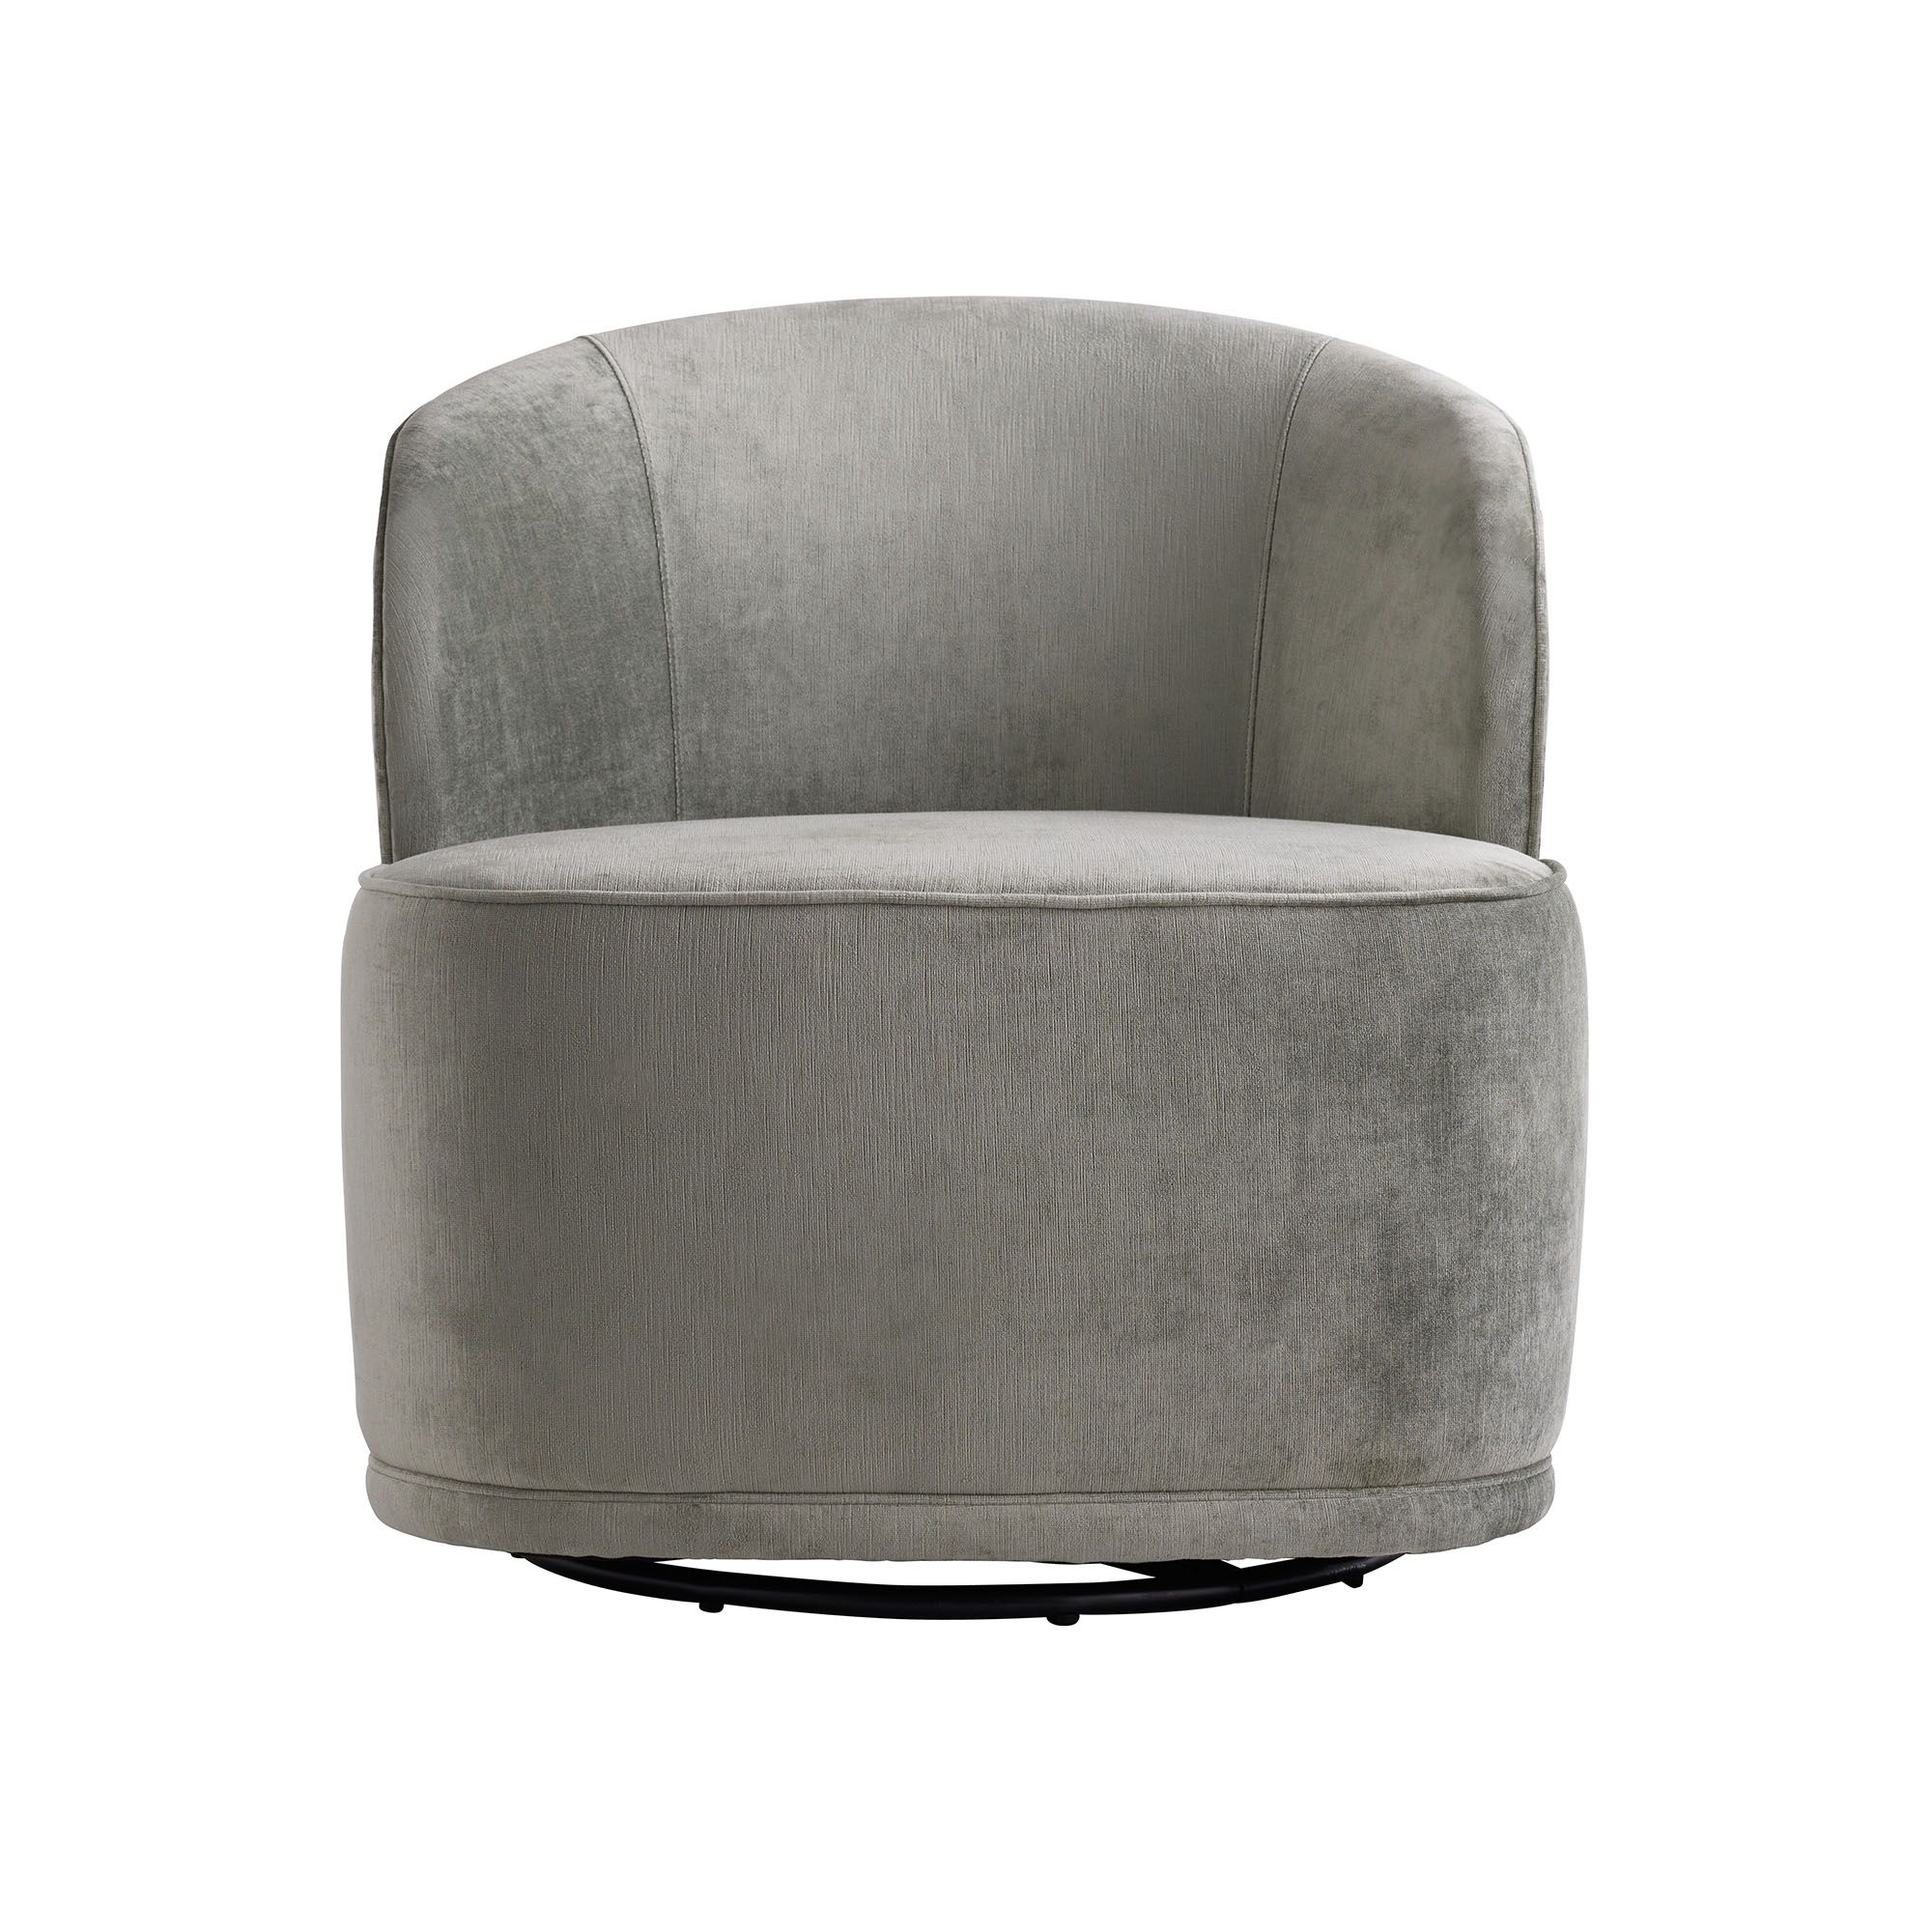 Купить Кресло Kaitlyn Swivel Chair Mist Velvet Swivel в интернет-магазине roooms.ru